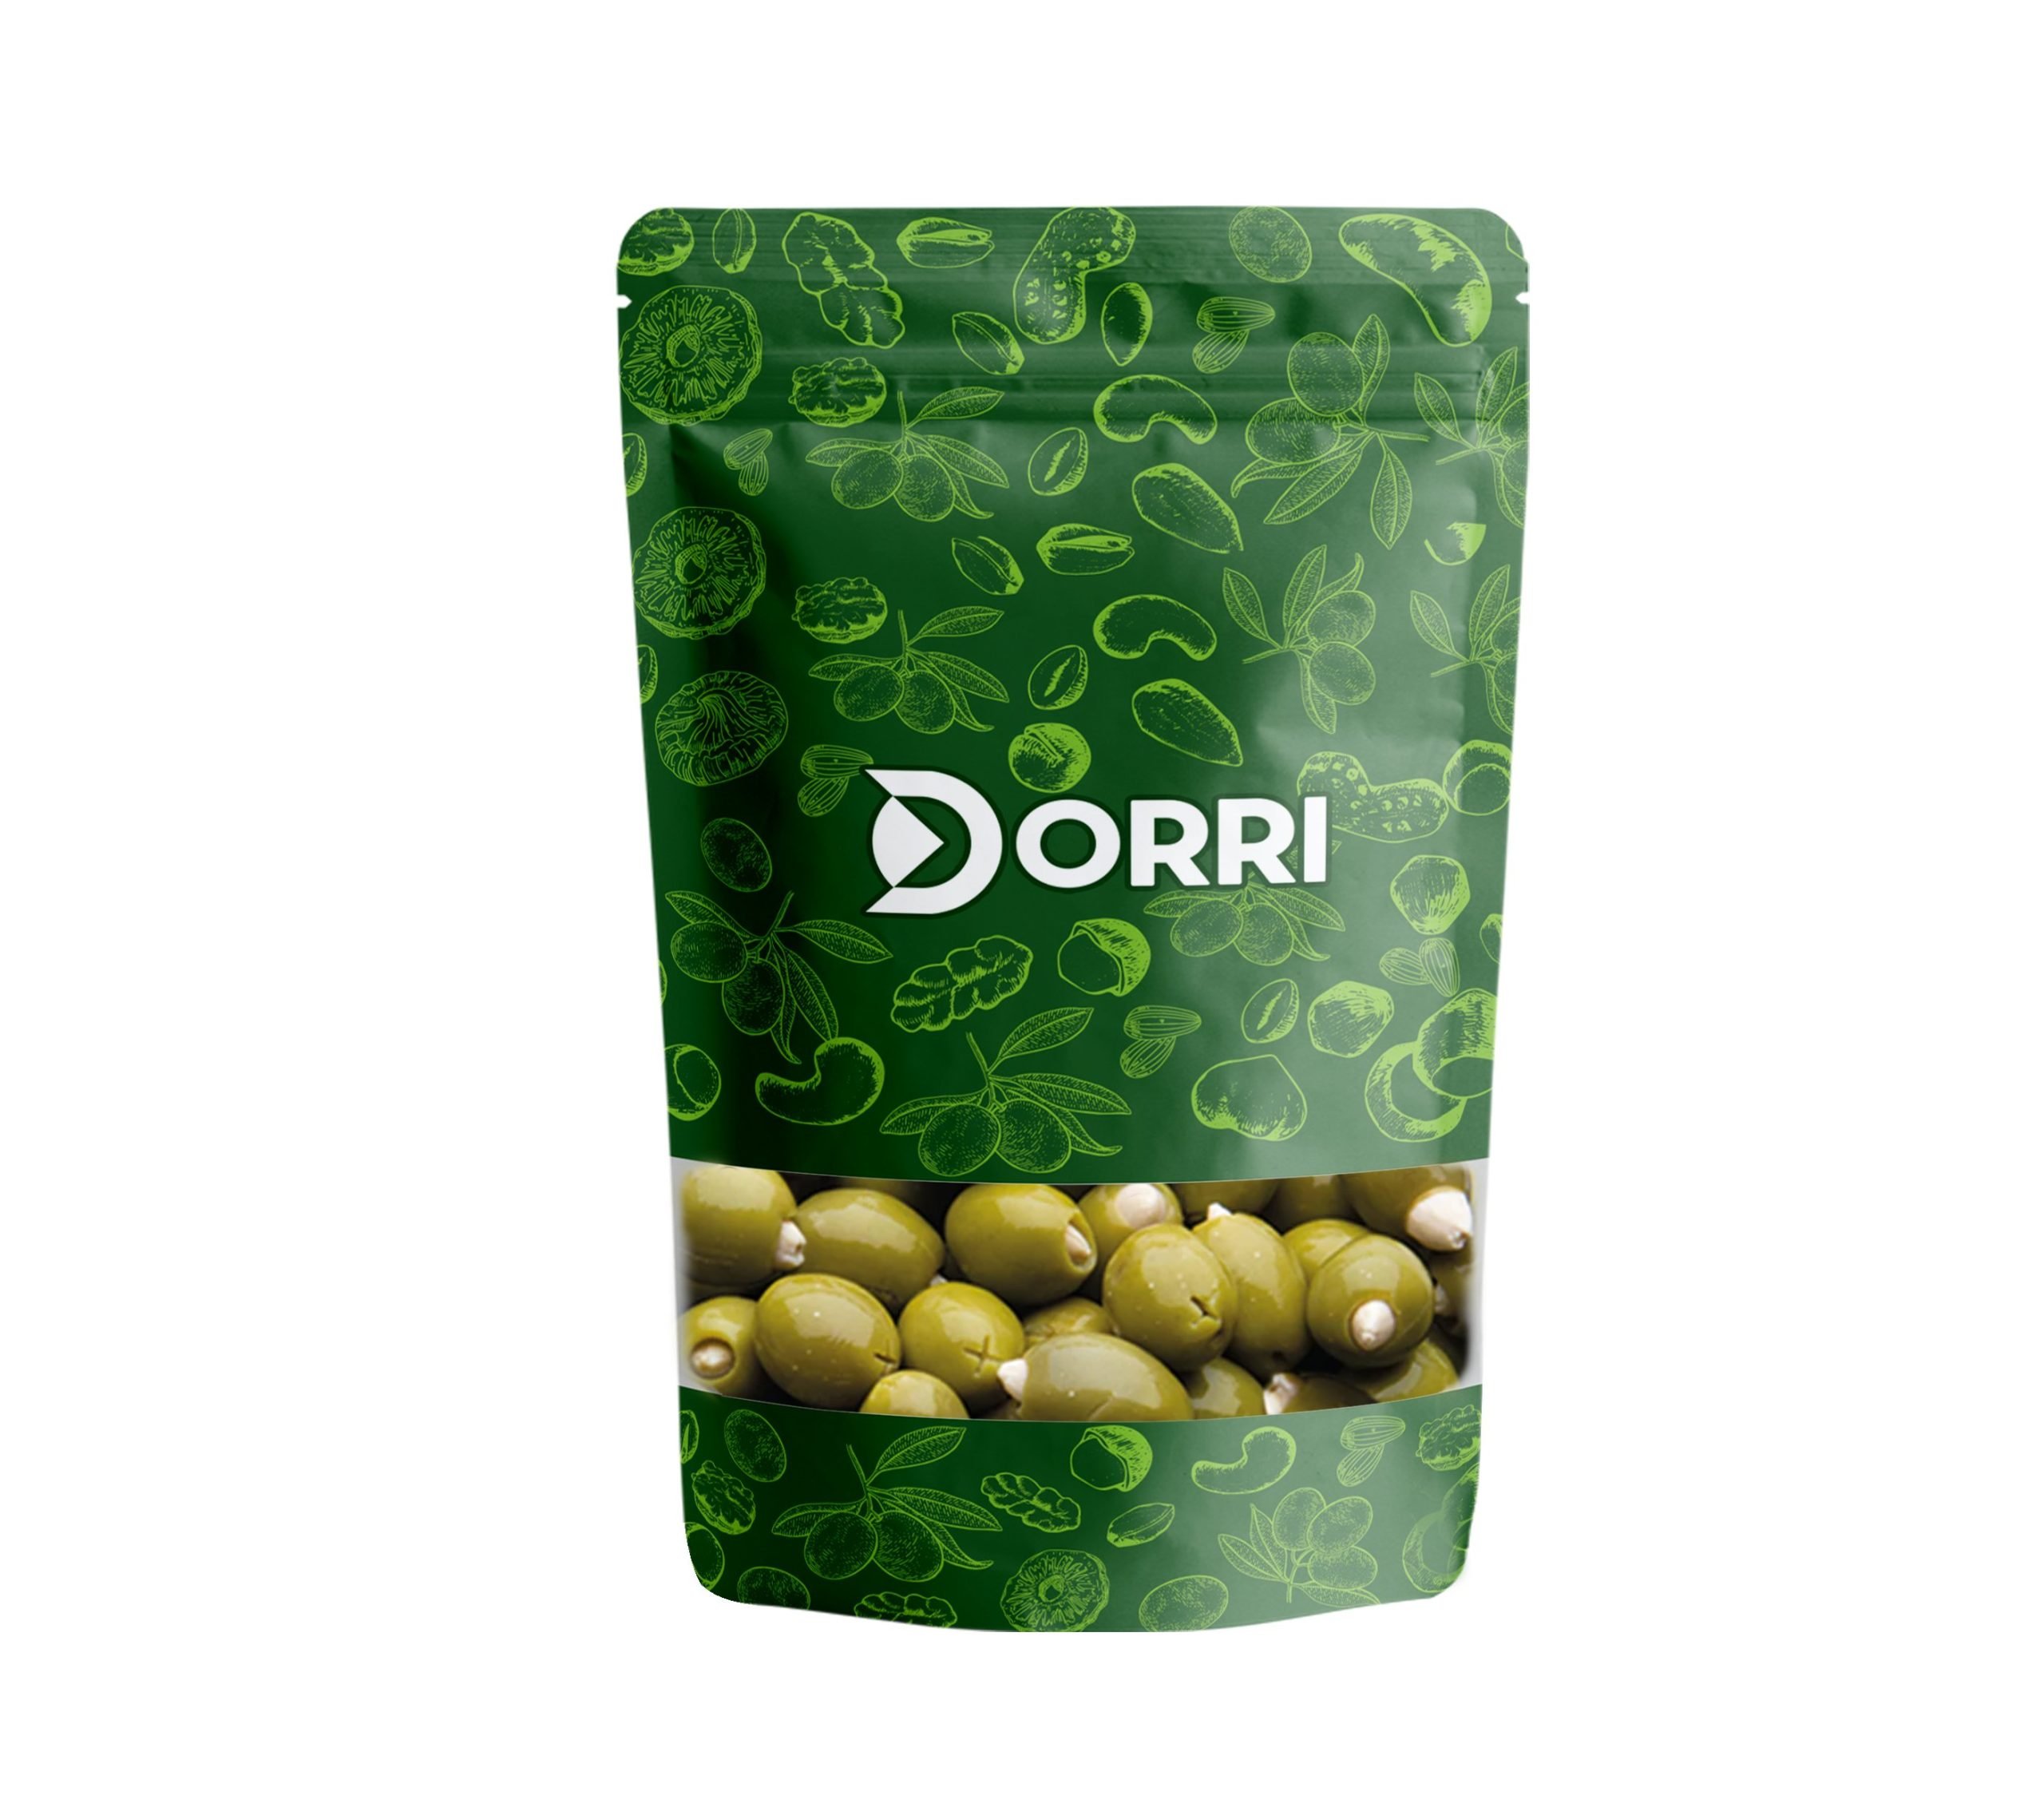 Dorri - Olives Stuffed Almond in Brine